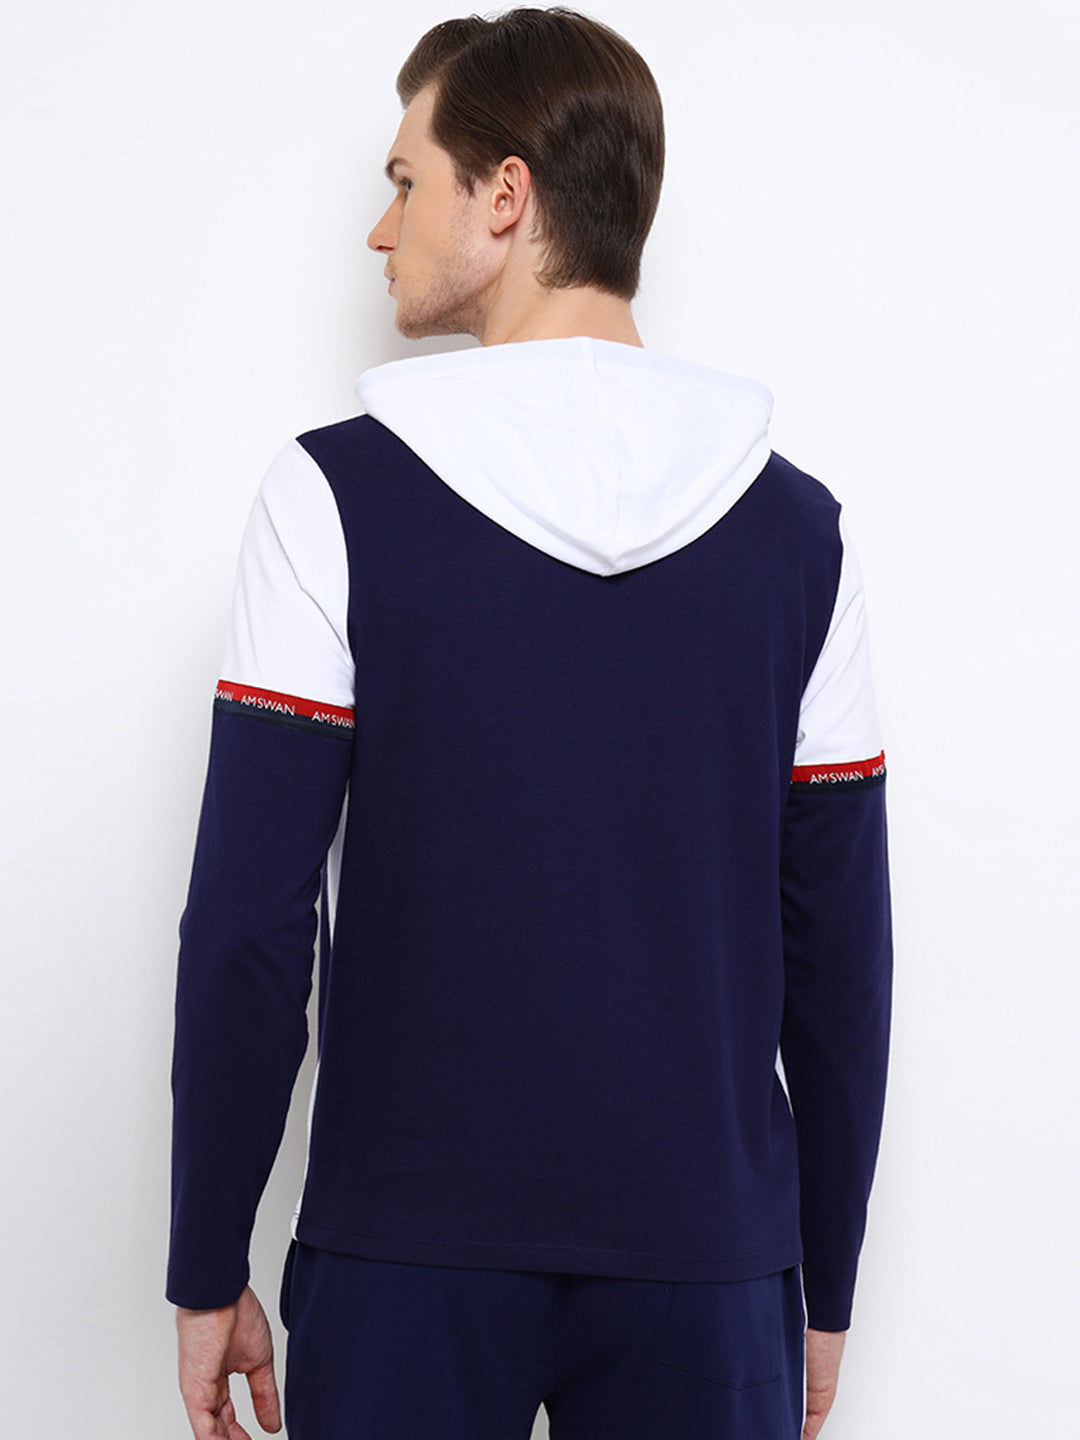 Men's Full Sleeve Sweatshirt with Cotton-Rich Printed Design